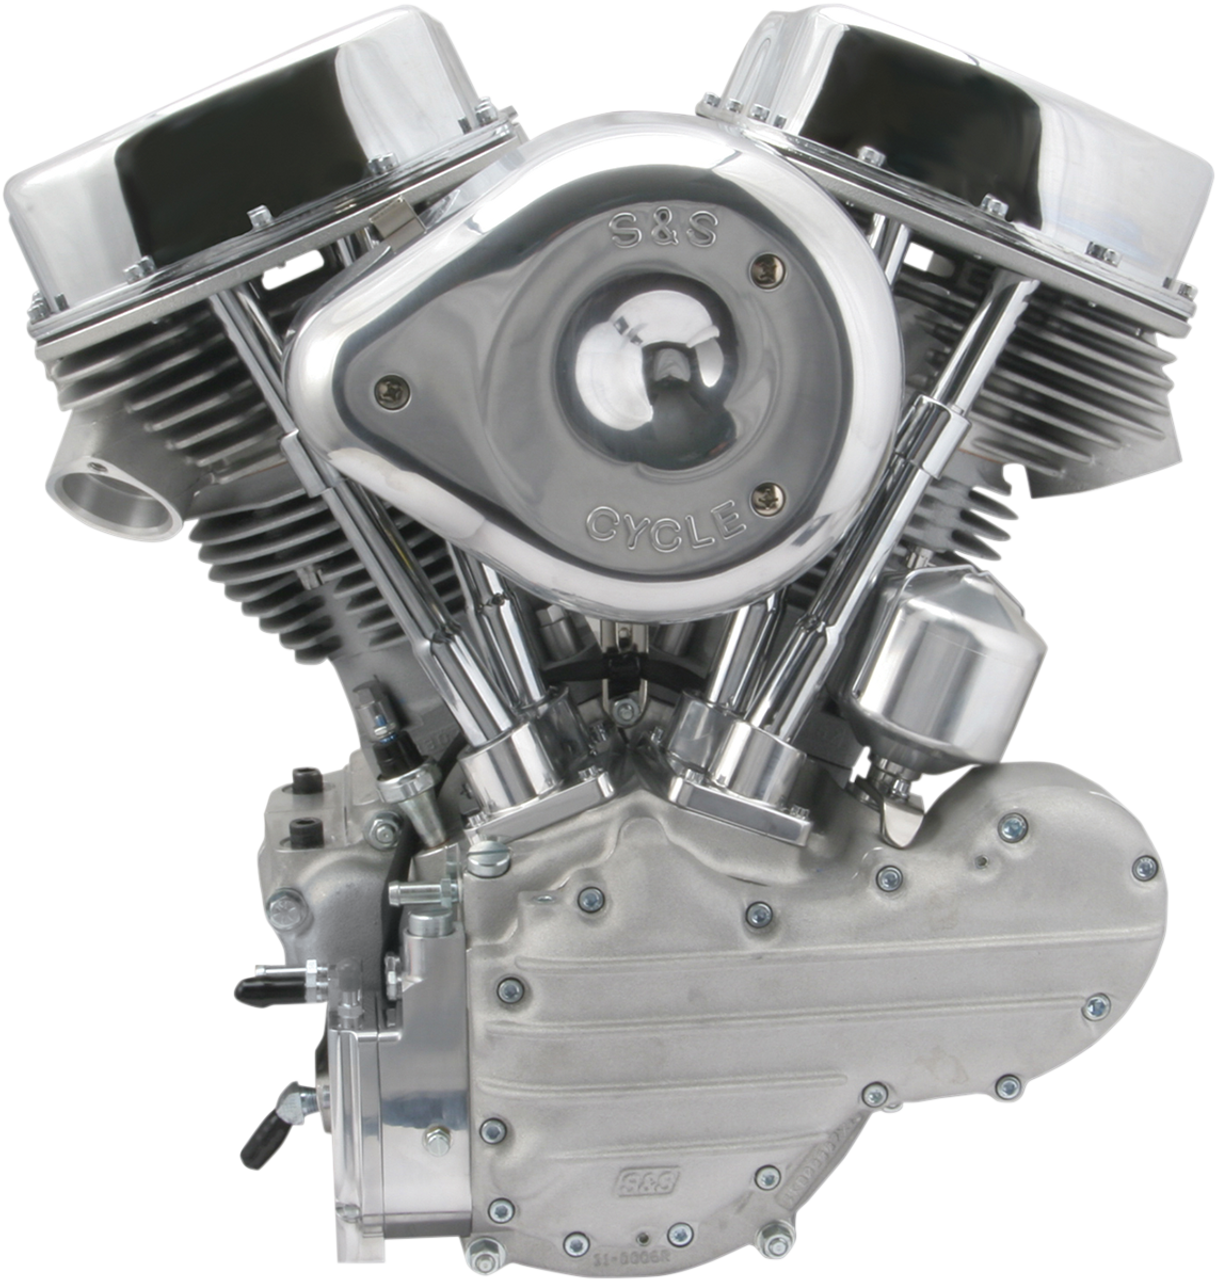 P93 Series Engine